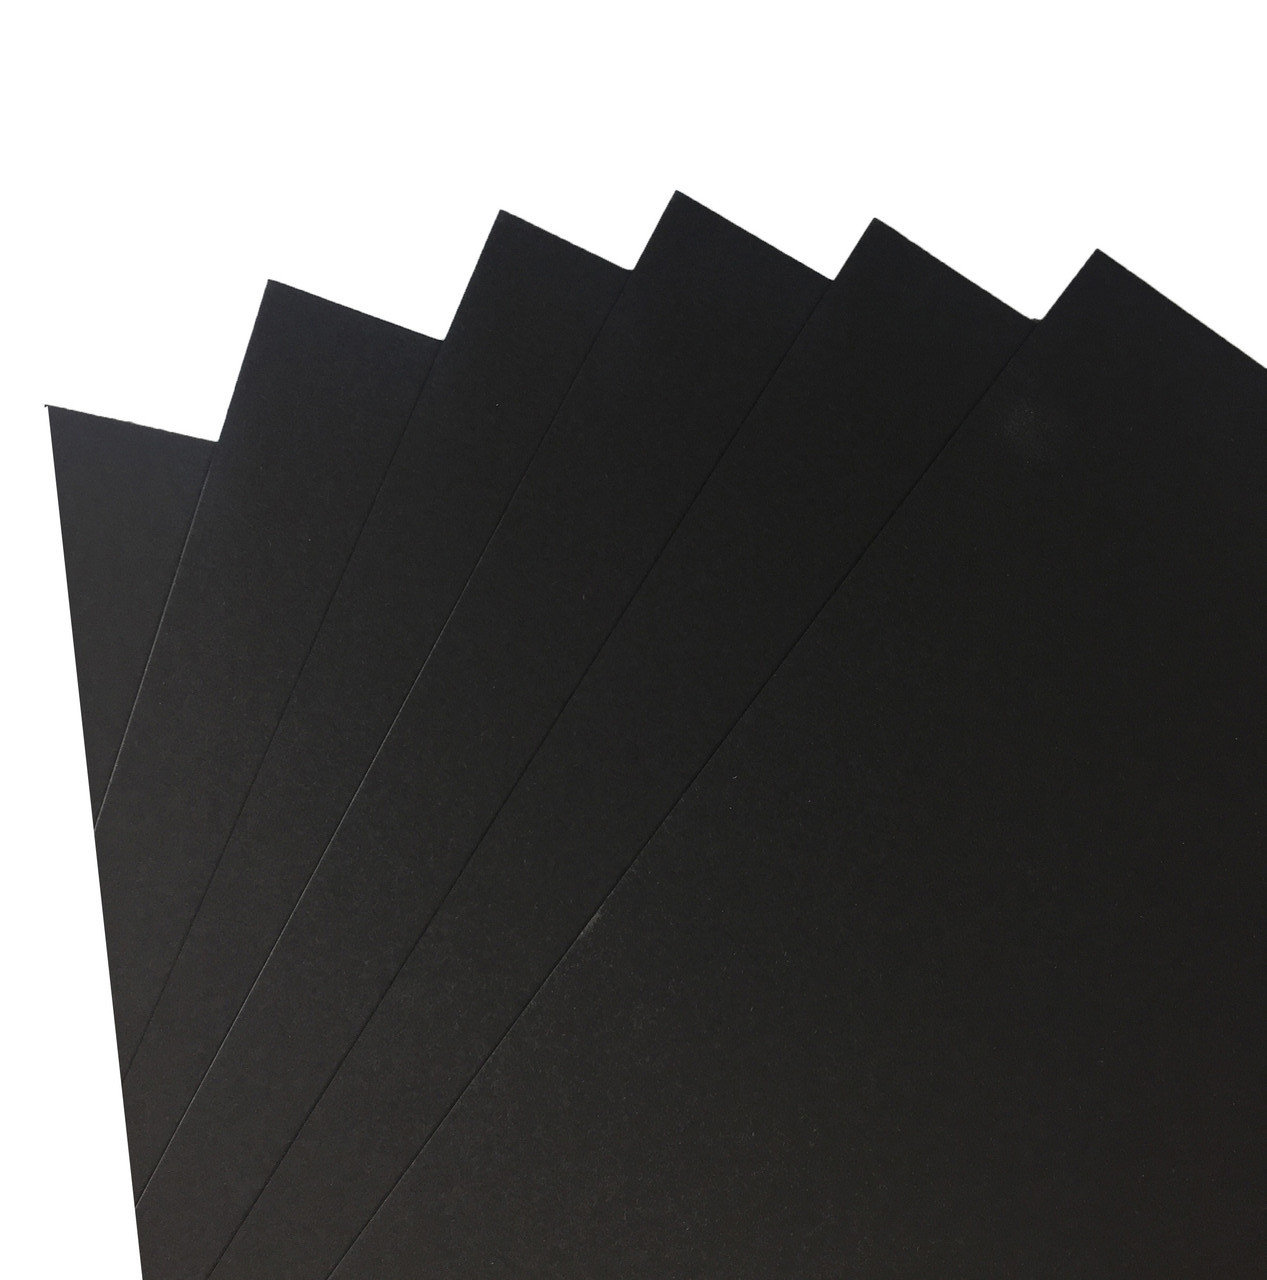 Черная бумага картон